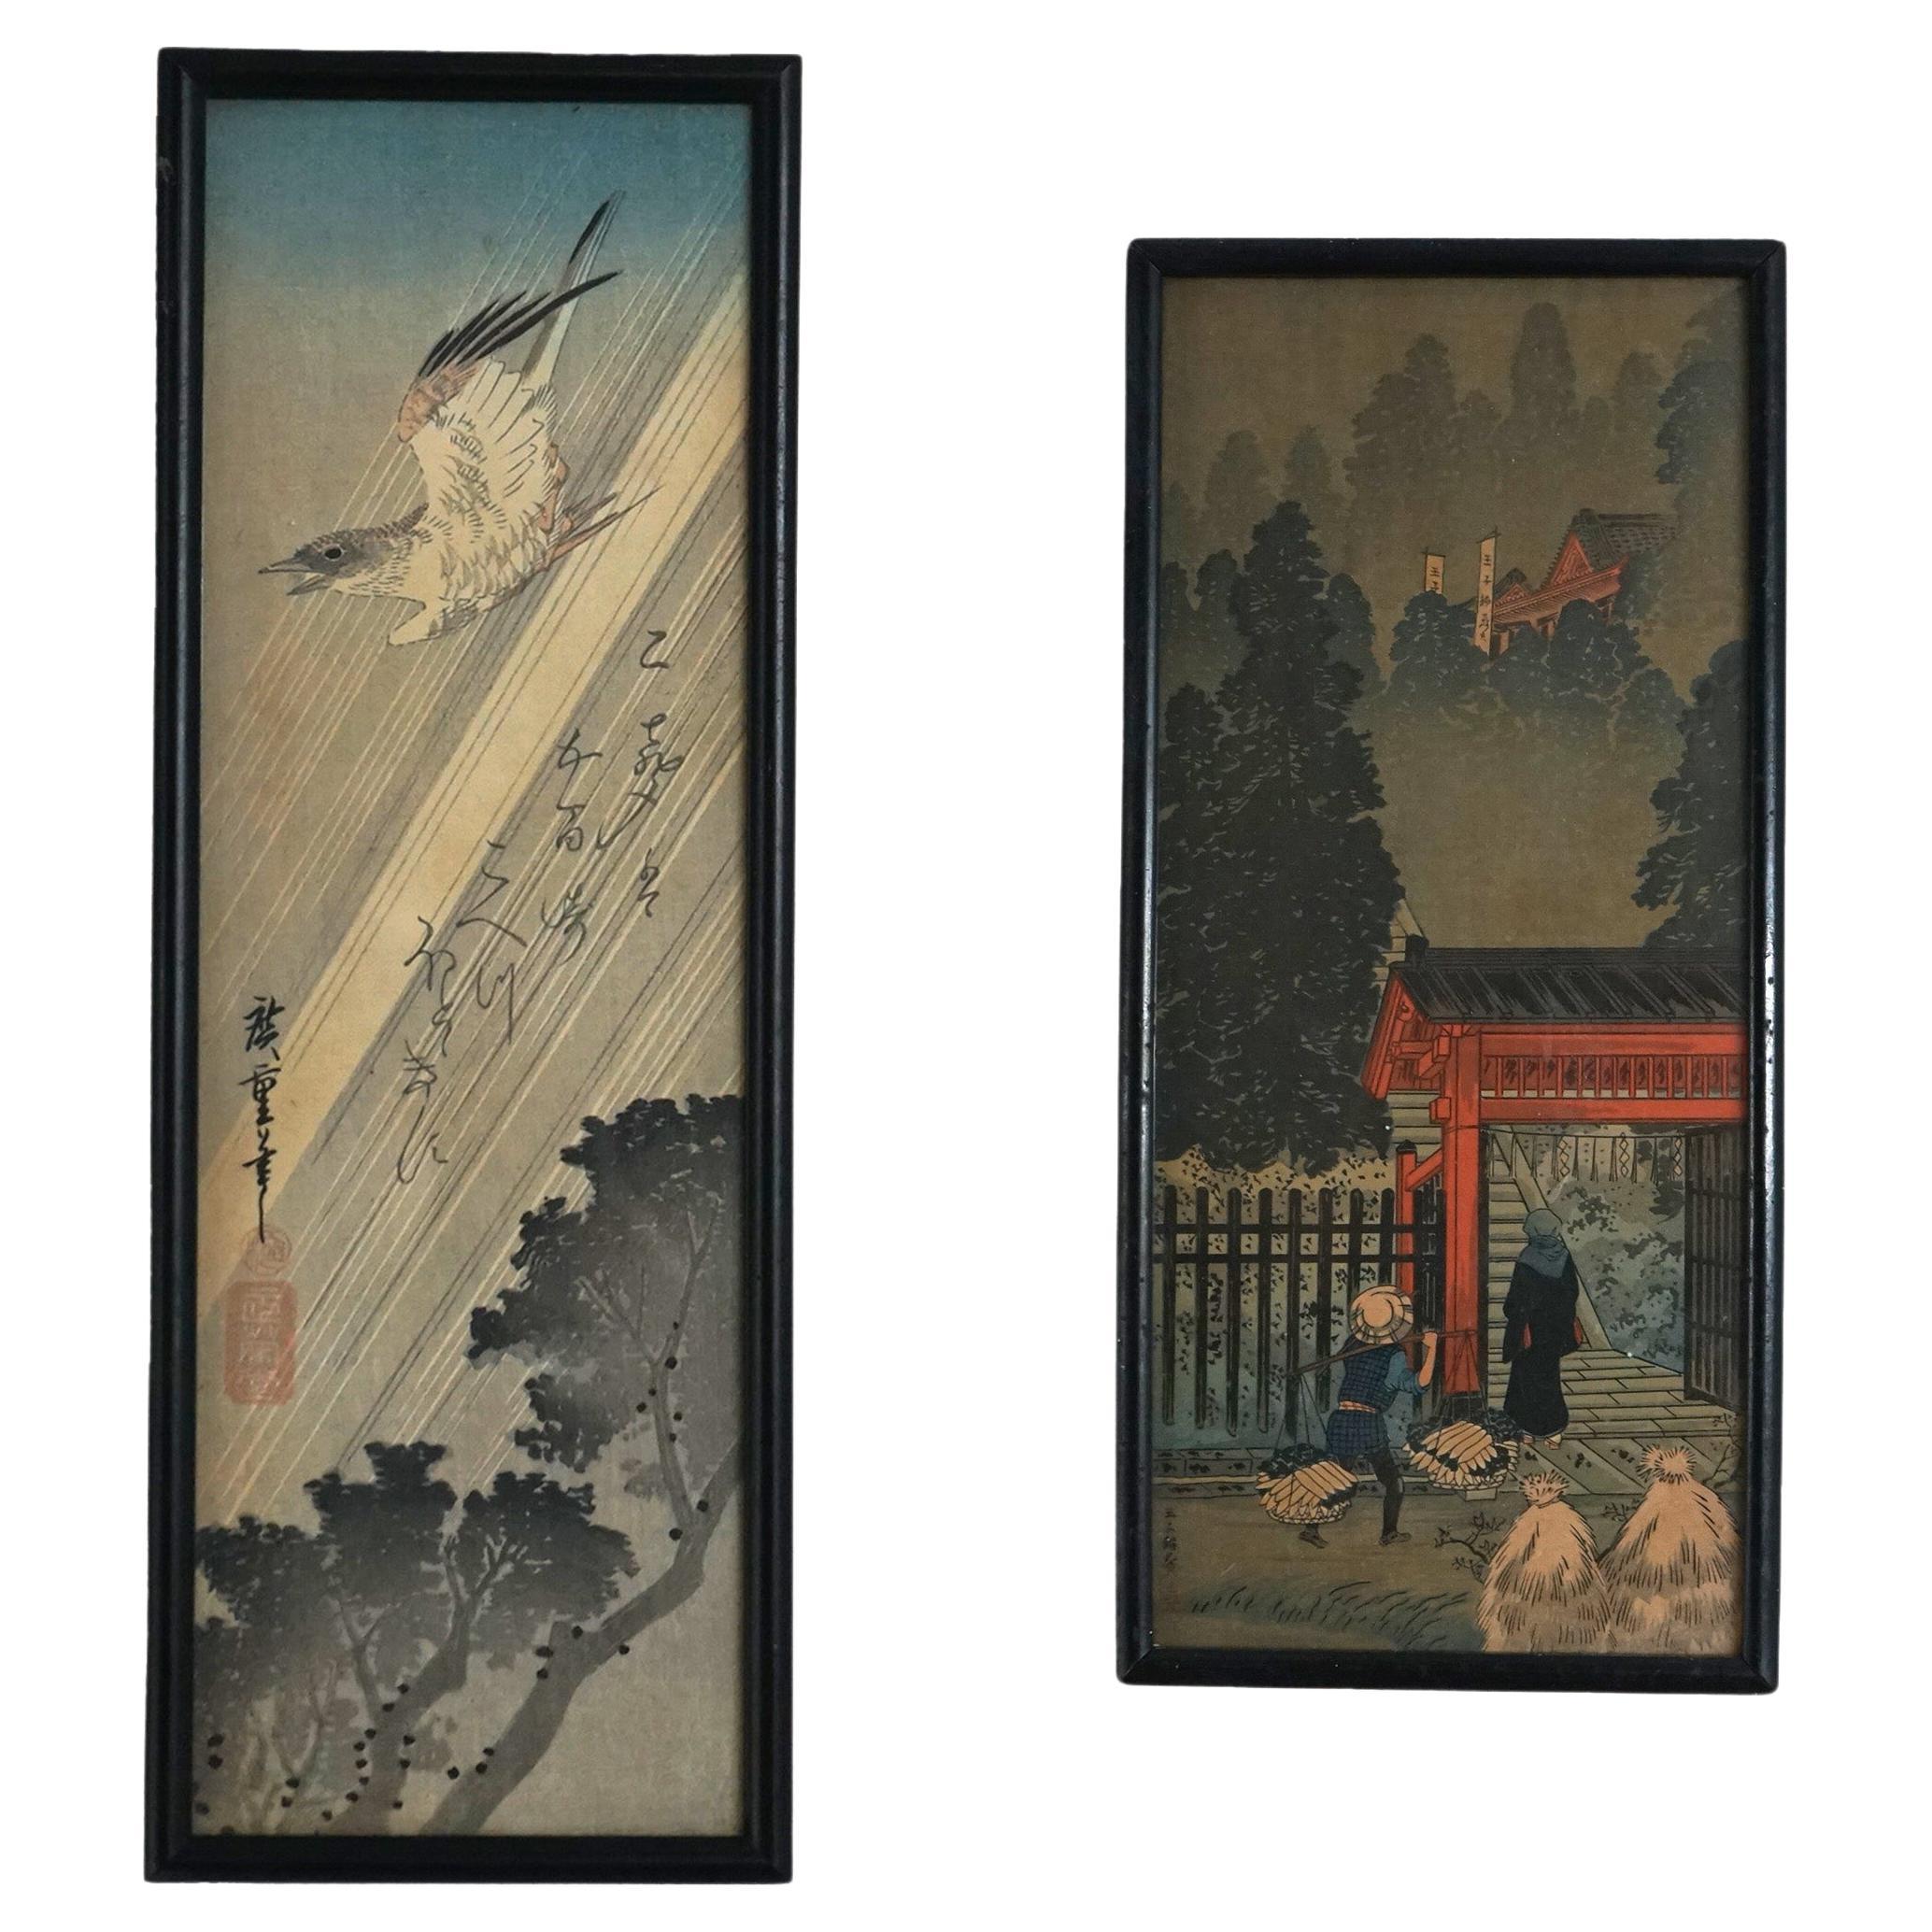 Japanese Woodblock Prints by Utagawa Hiroshige and Hiroaki Takahashi 20thC